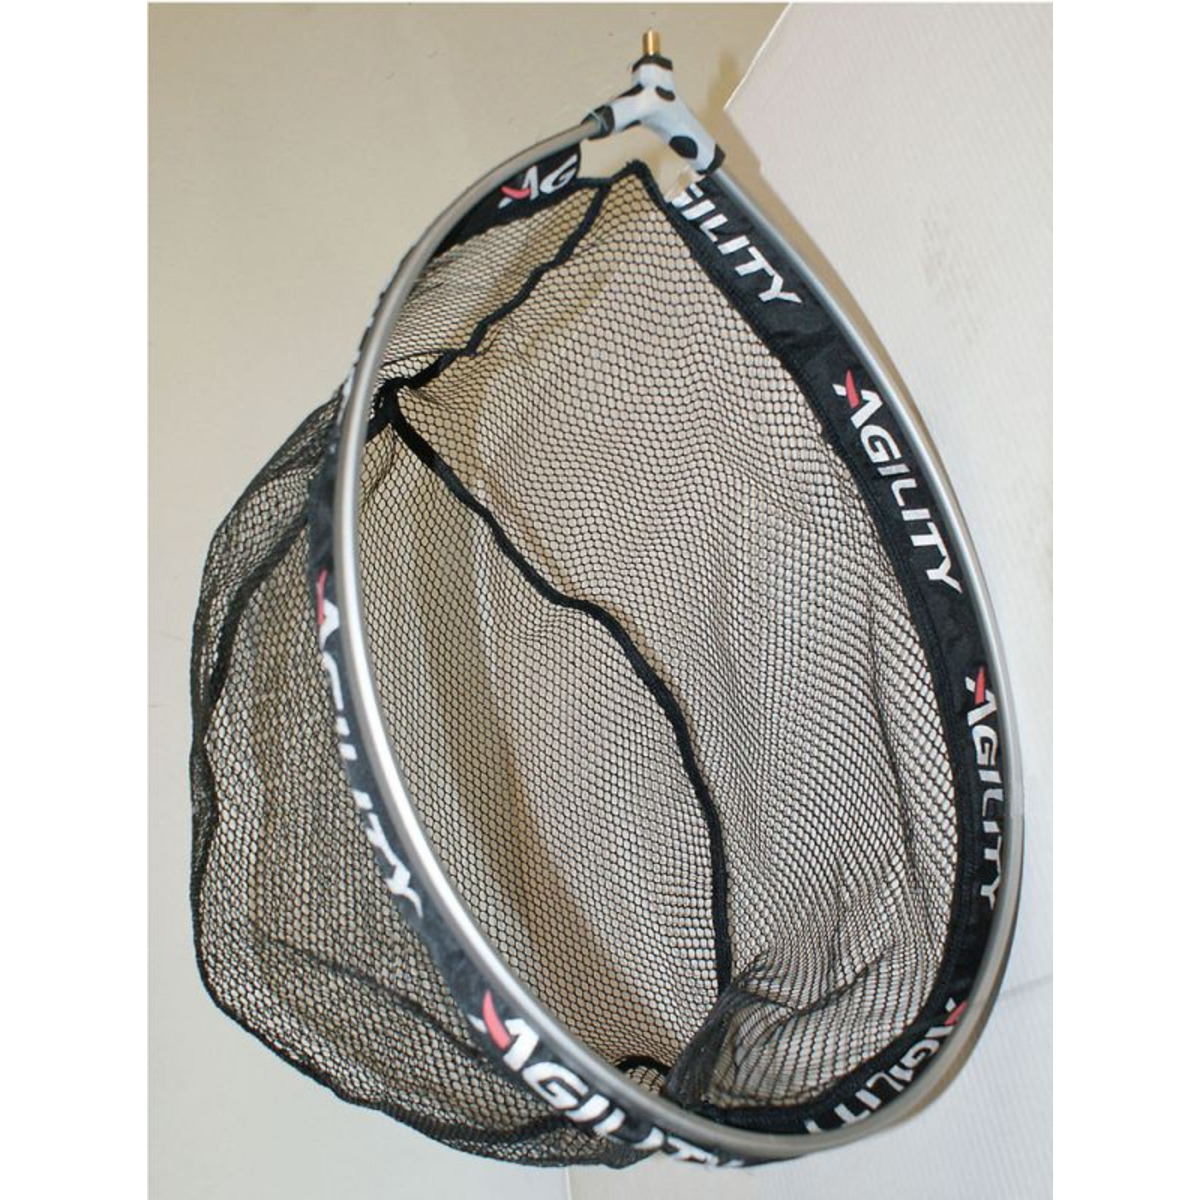 Shakespeare Agility Coarse Nets - Large - 64x50x3 cm - 0.36 kg 